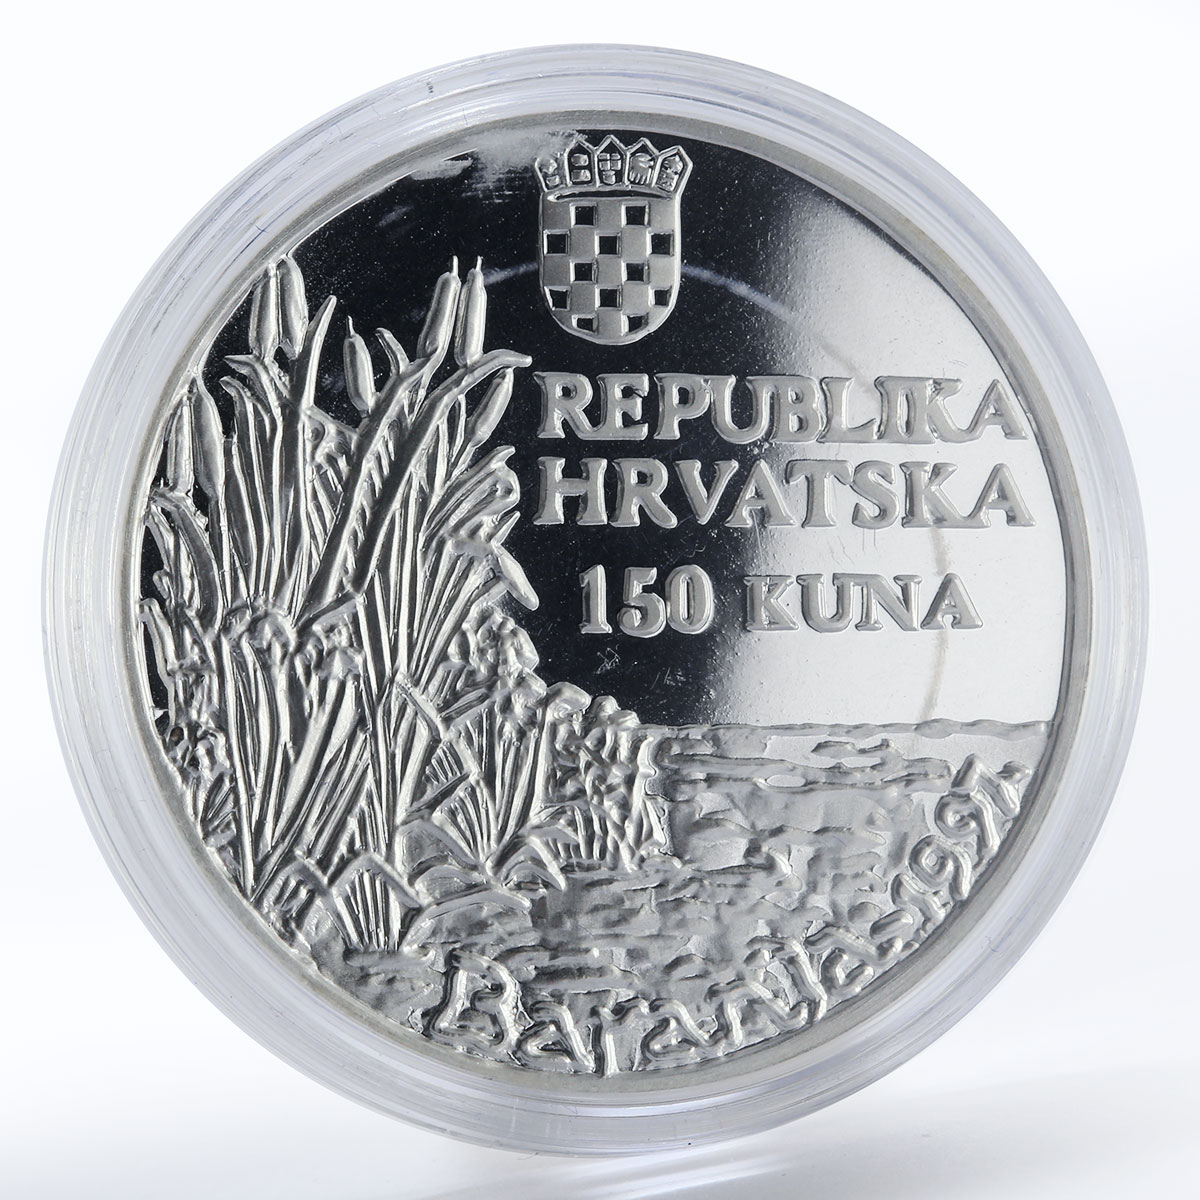 Croatia 150 kuna Baranja region White-Tailed Eagle bird proof silver coin 1997